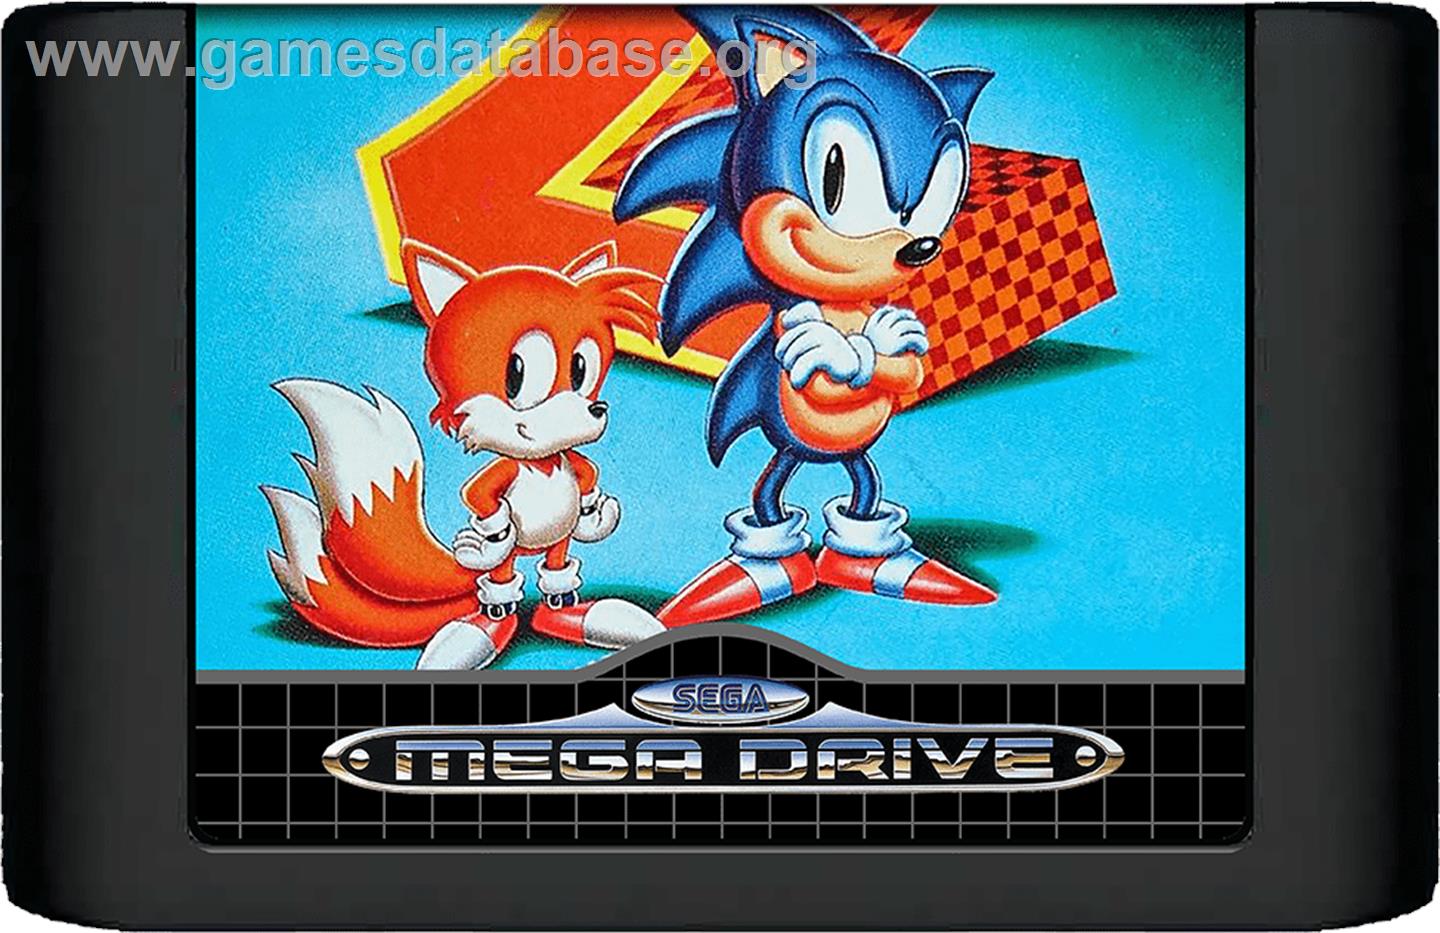 Sonic The Hedgehog 2 - Sega Genesis - Artwork - Cartridge